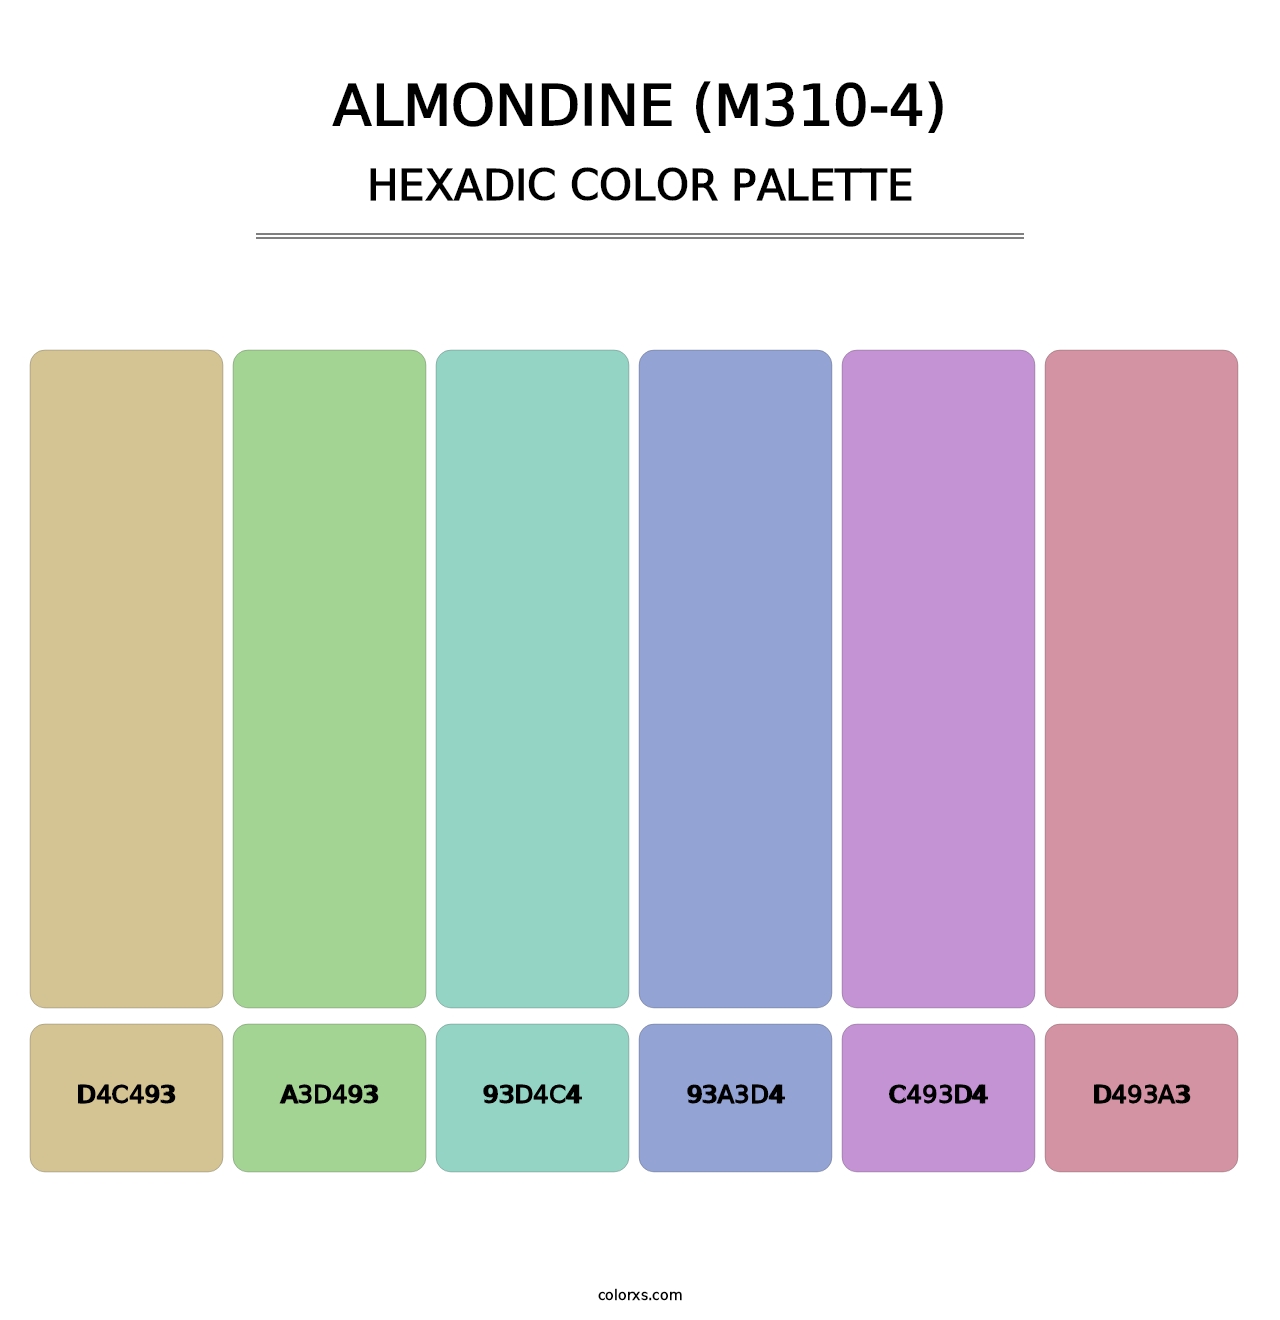 Almondine (M310-4) - Hexadic Color Palette